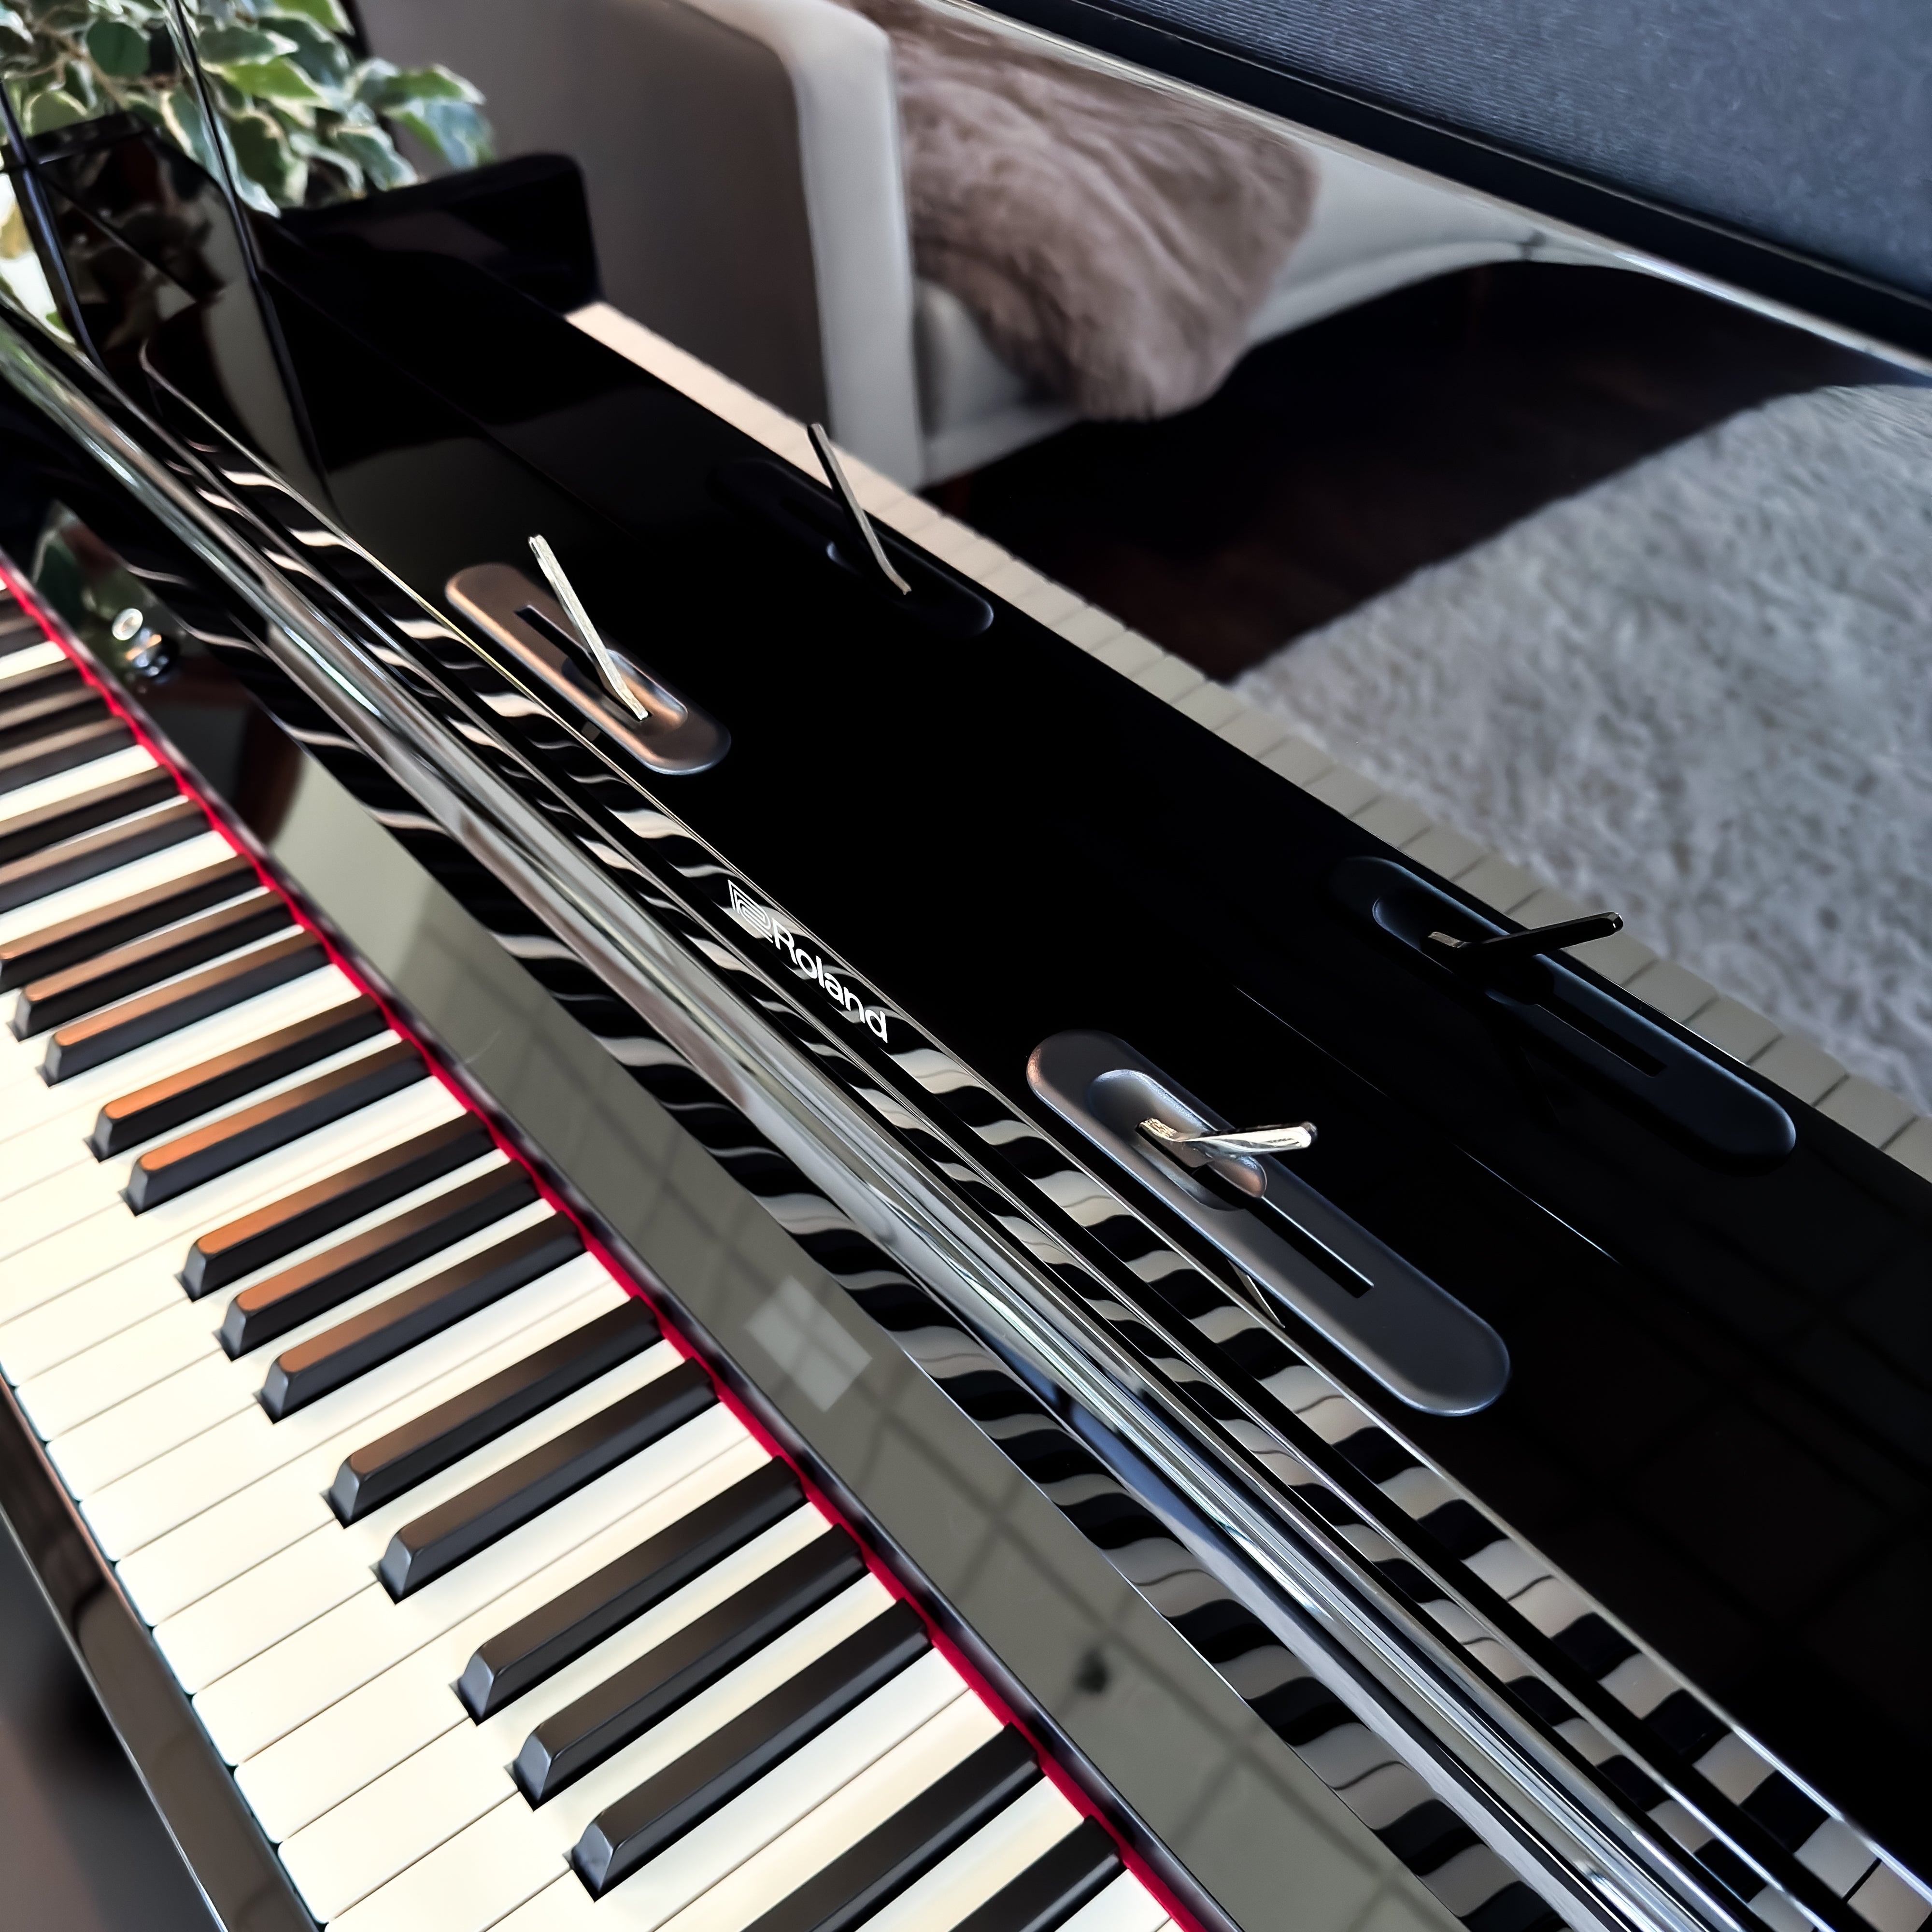 Roland LX-6 Digital Piano with Bench - Polished Ebony, View 7